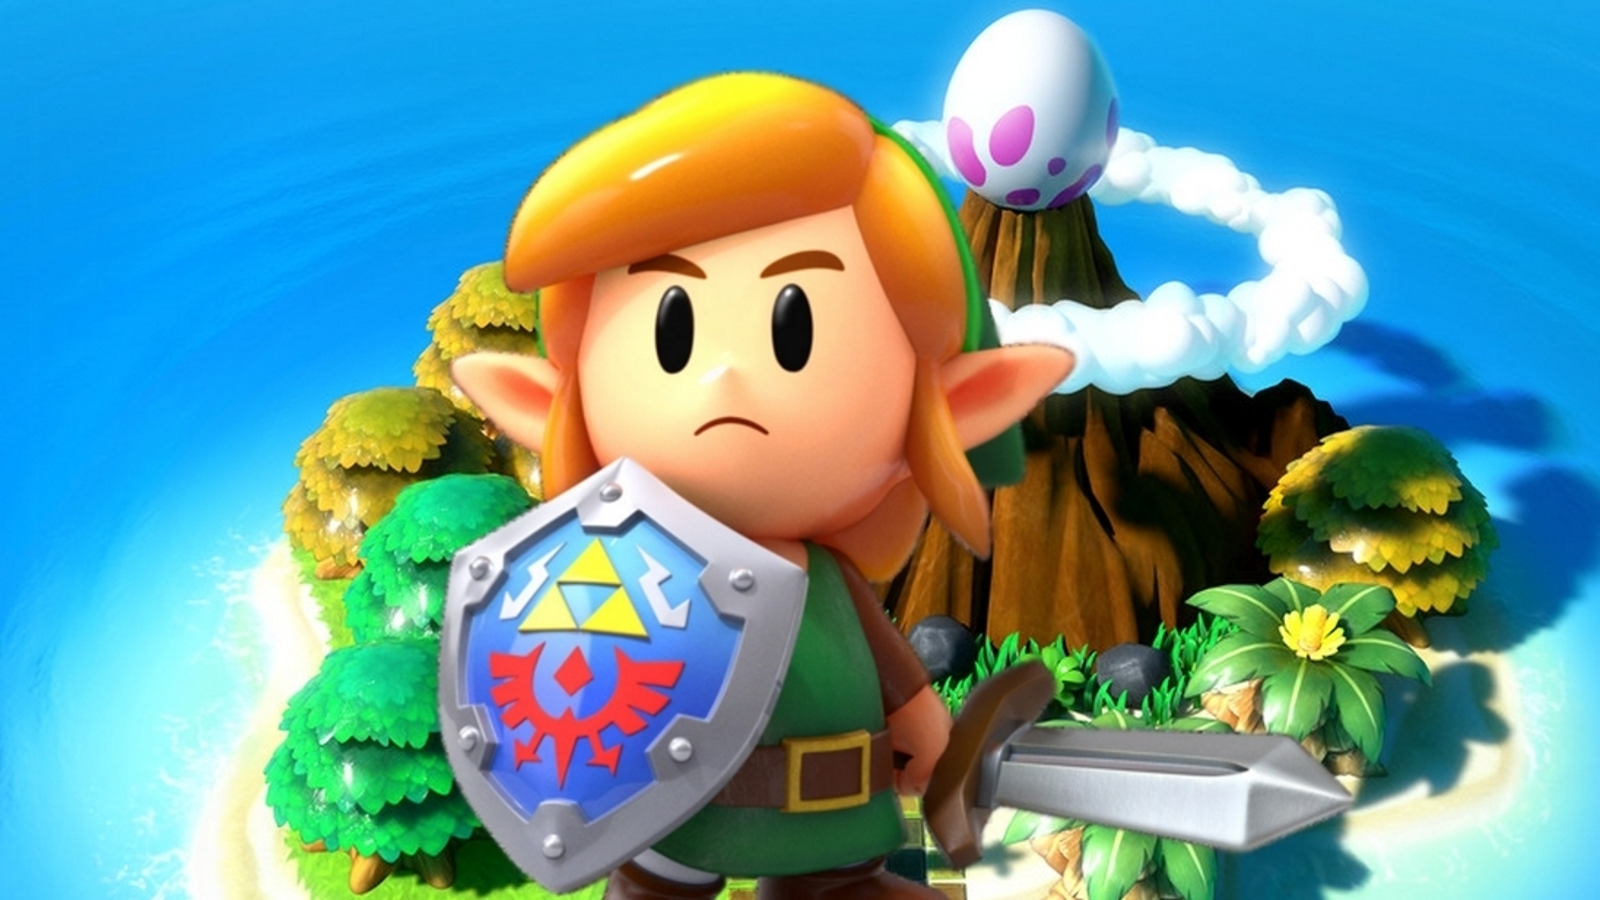 The Legend of Zelda: Link's Awakening - Análise